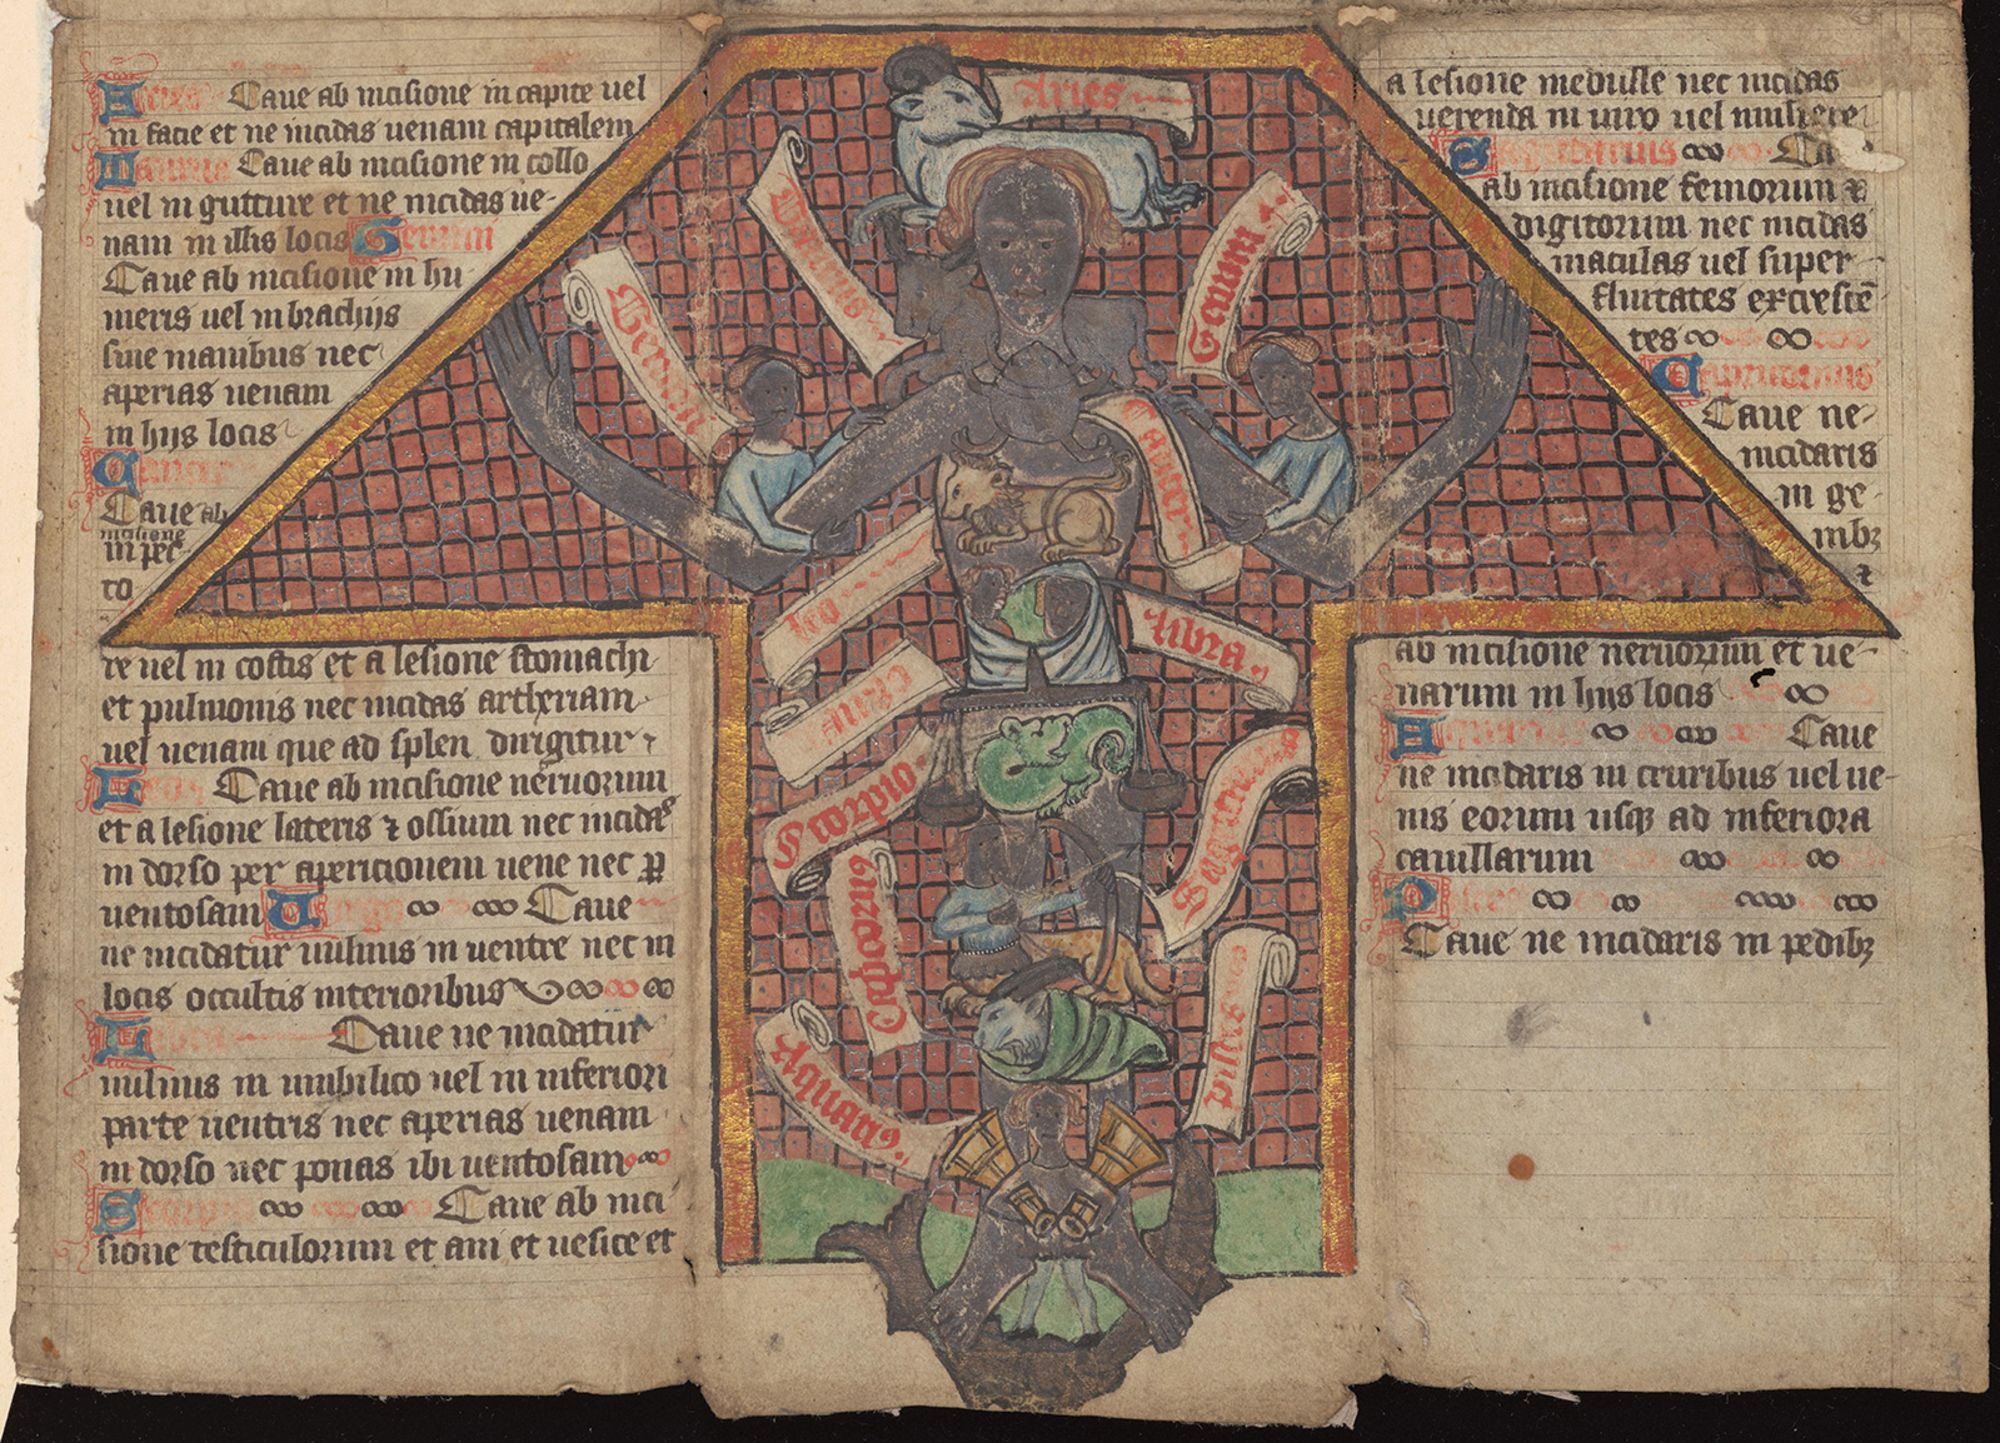 04 medieval cures manuscripts zodiac